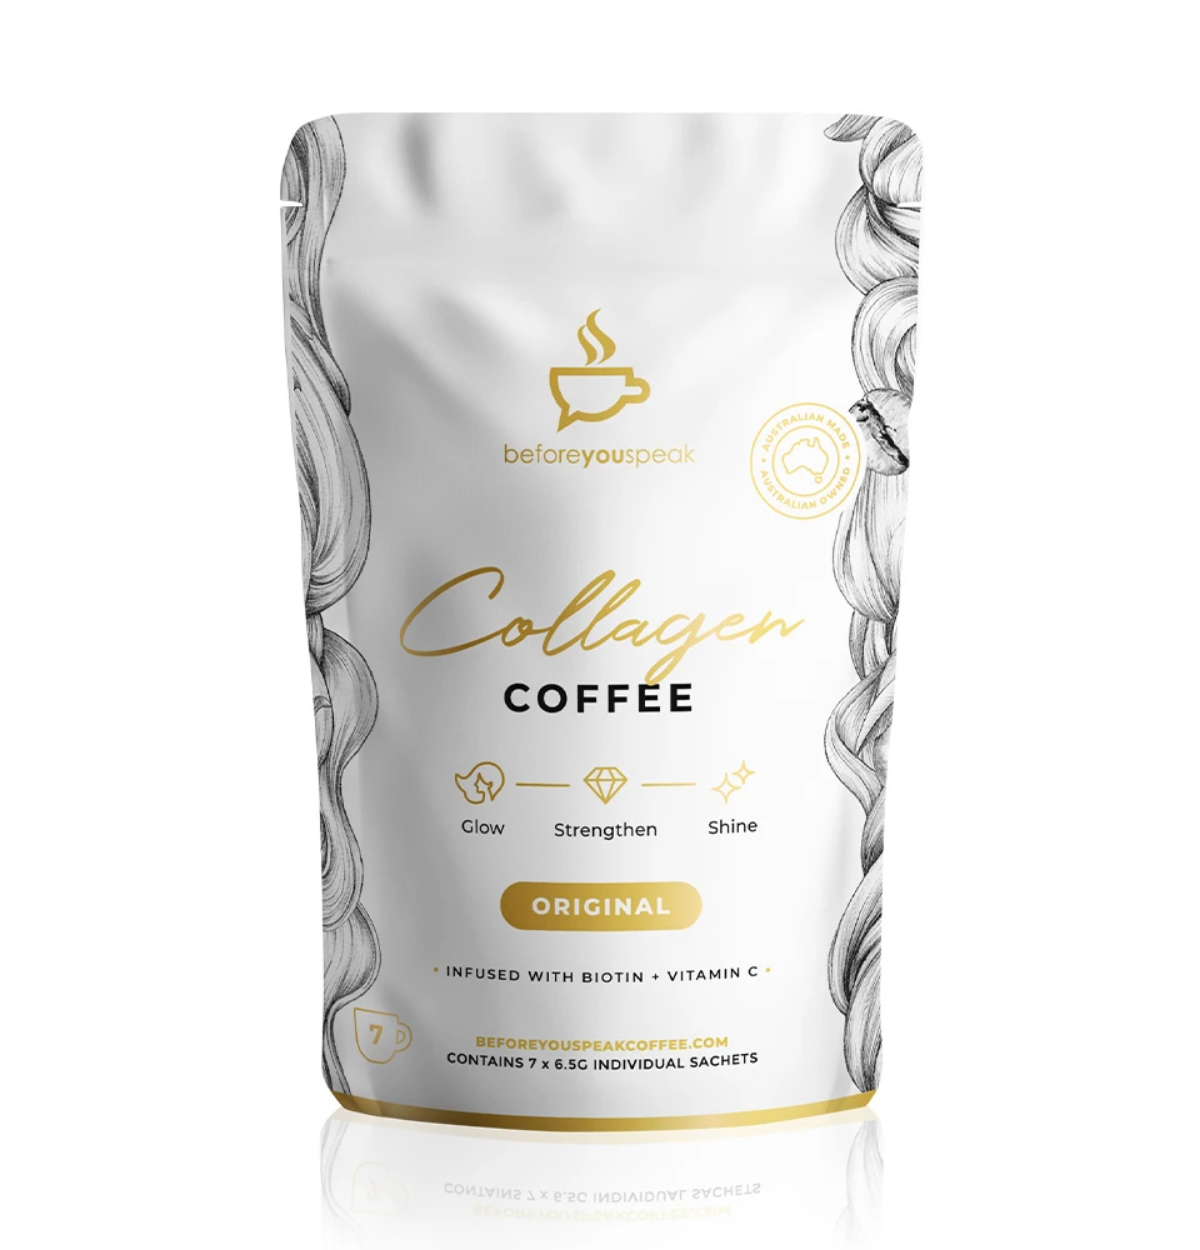 Image of Before you Speak Collagen Coffee - Original - 7 Serves RIGINAL BIOTIN VITAMIN * 5G INDIVIDUAL SACHETS 